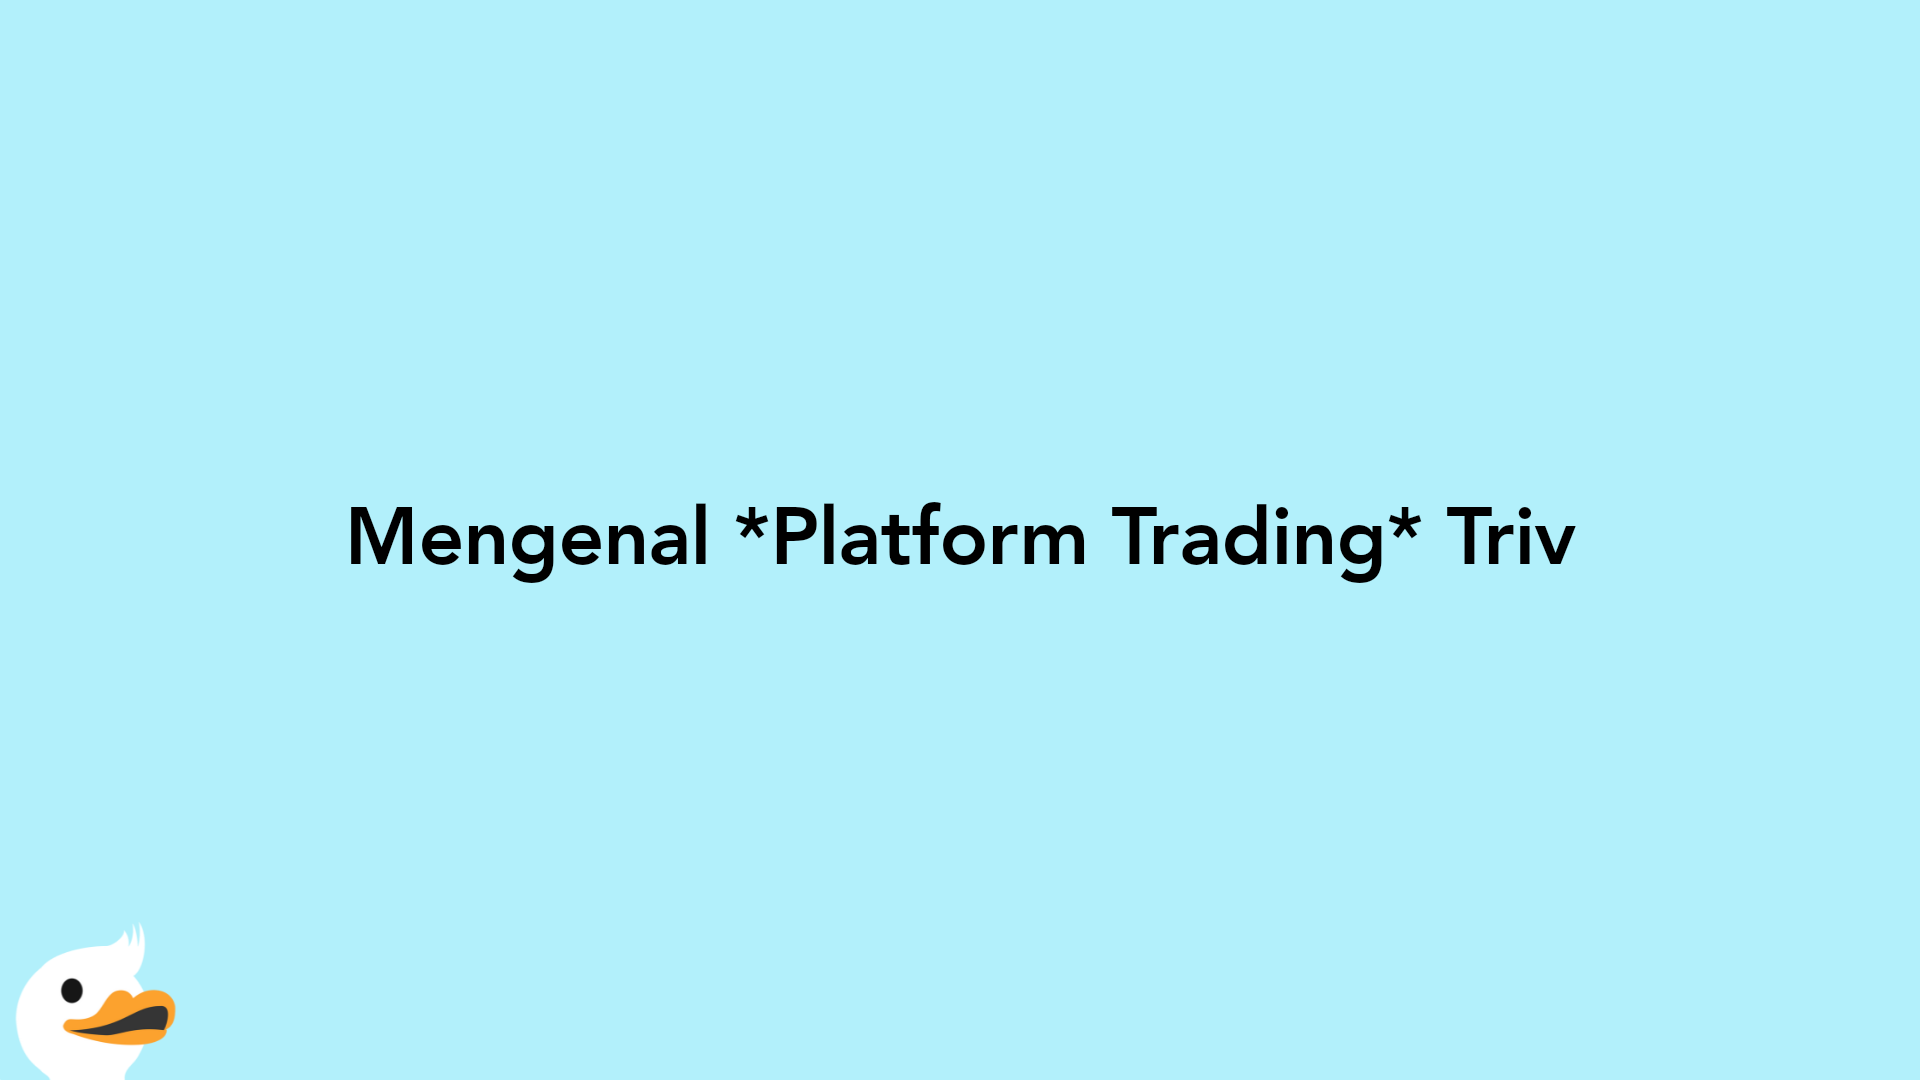 Mengenal Platform Trading Triv